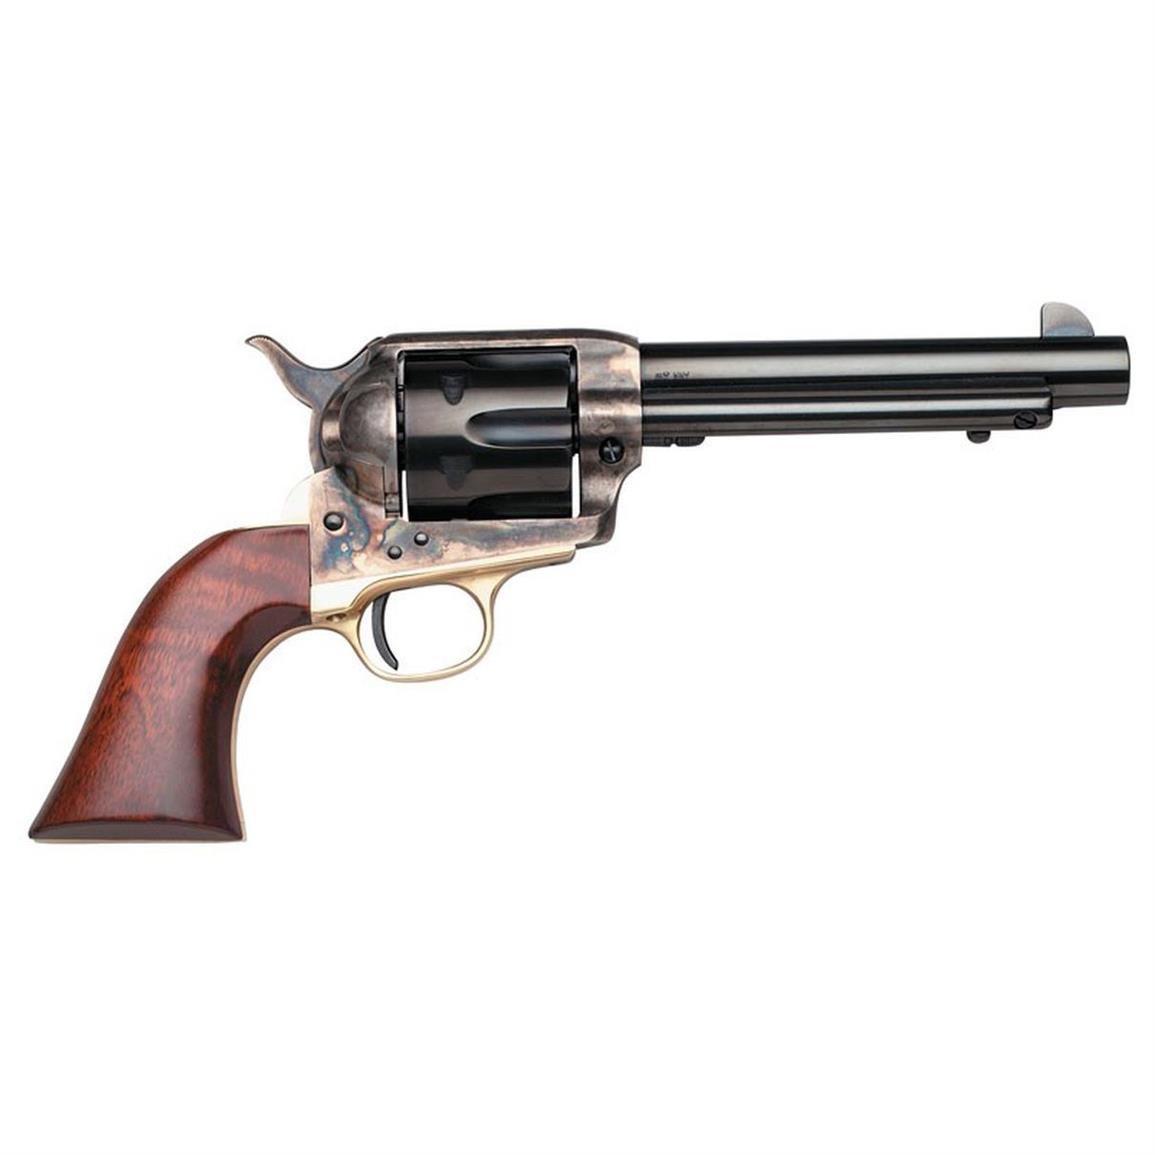 Taylor's & Co. Uberti The Ranch Hand, Revolver, .357 Magnum, 440, 839665009963, 4.75 inch Barrel